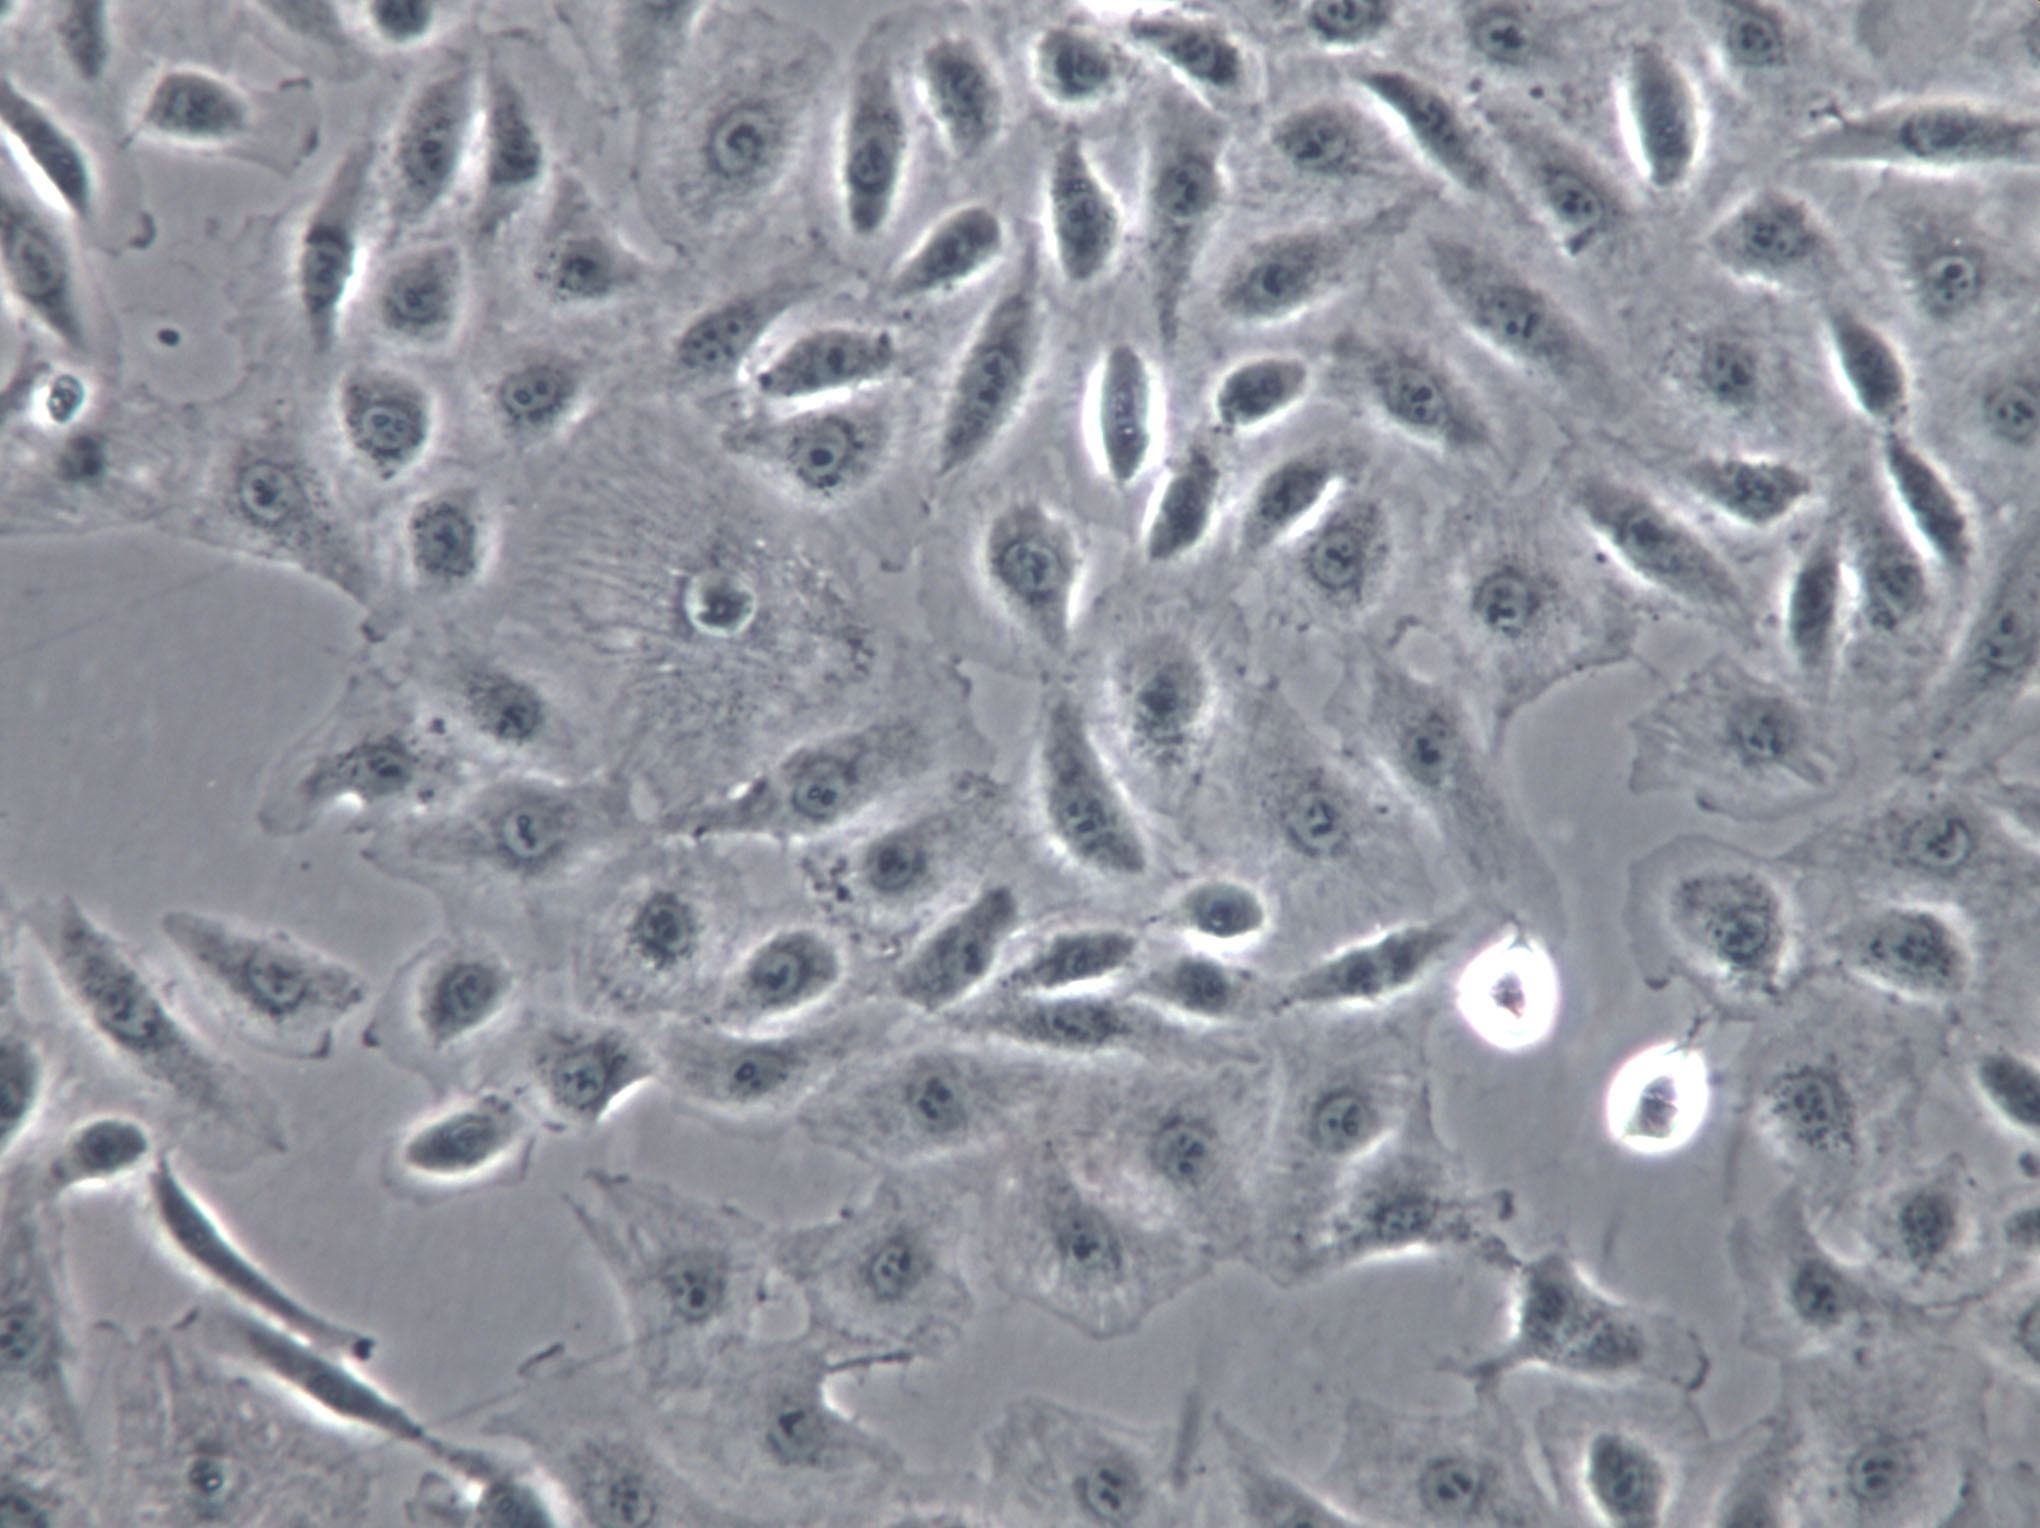 SNU-601 Cells|人胃癌克隆细胞,SNU-601 Cells